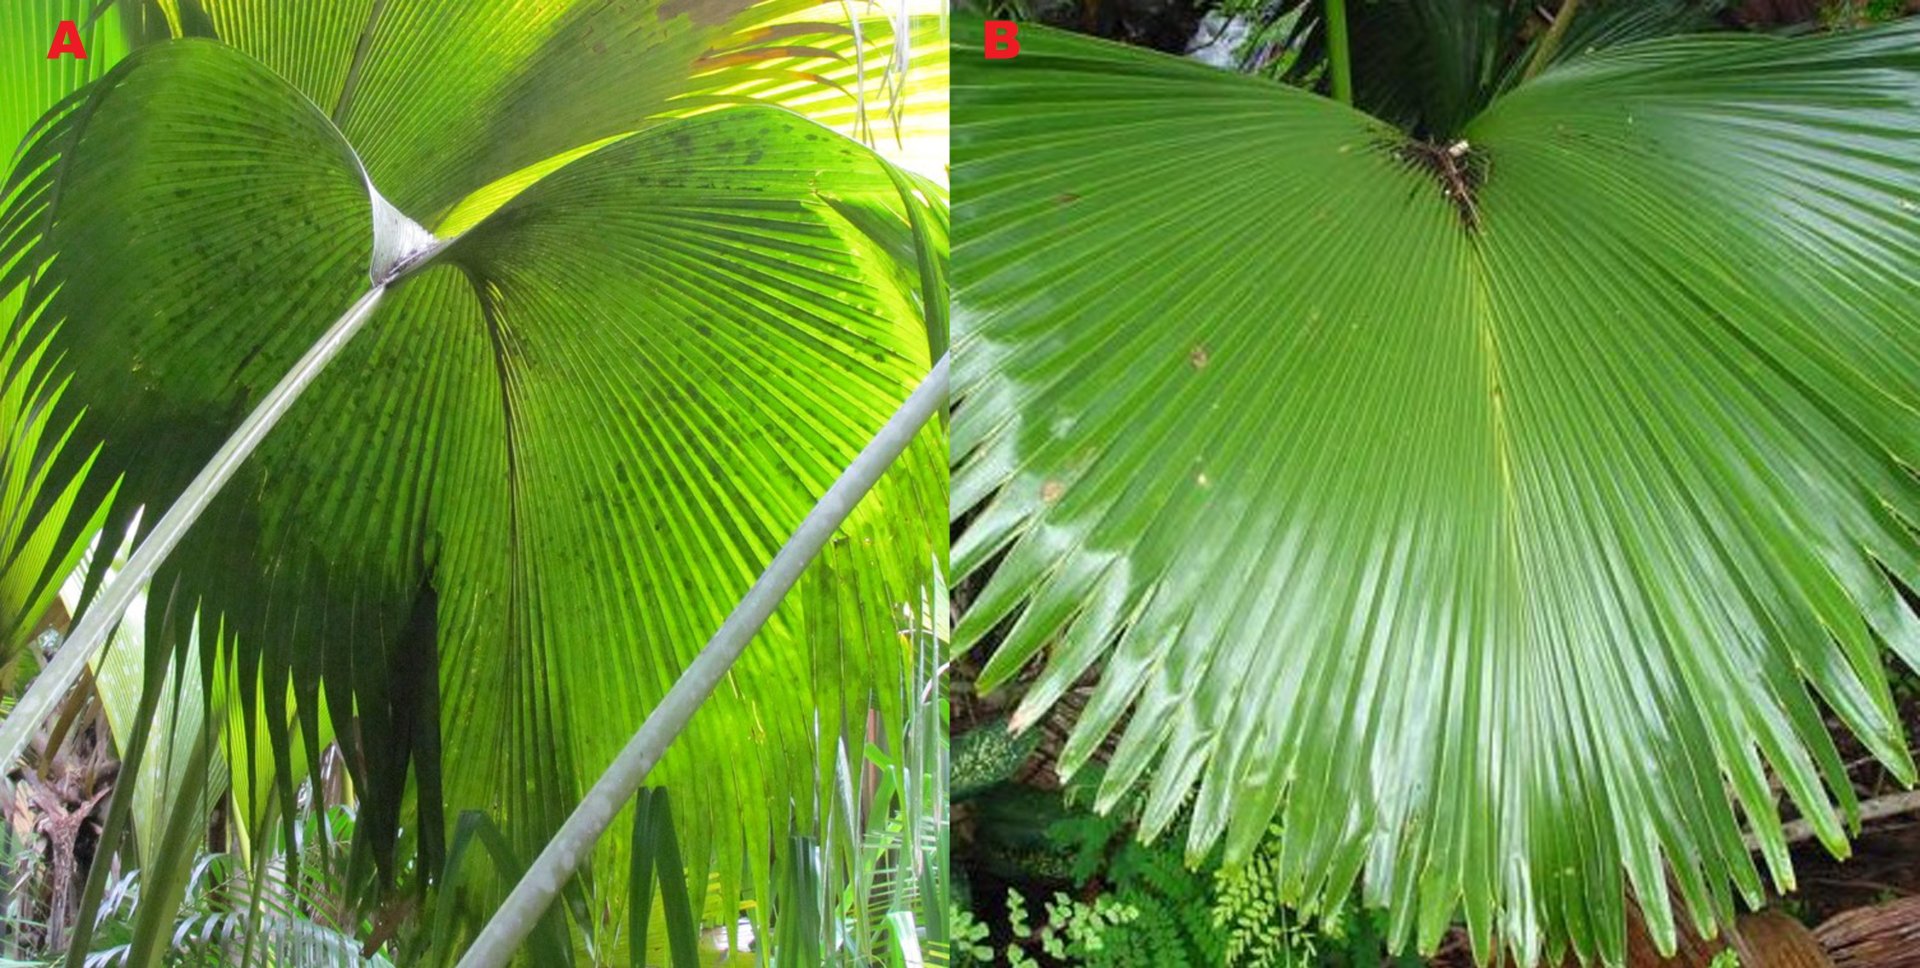 Obr. 2. Listy palmy Lodoicea maldivica. A) Autor: Dan. Převzato z  https://www.flickriver.com/photos/ twiga_swala/7840613048 B) Autor: Kam Hong Leung. Převzato z: https://www.flickriver.com/photos/